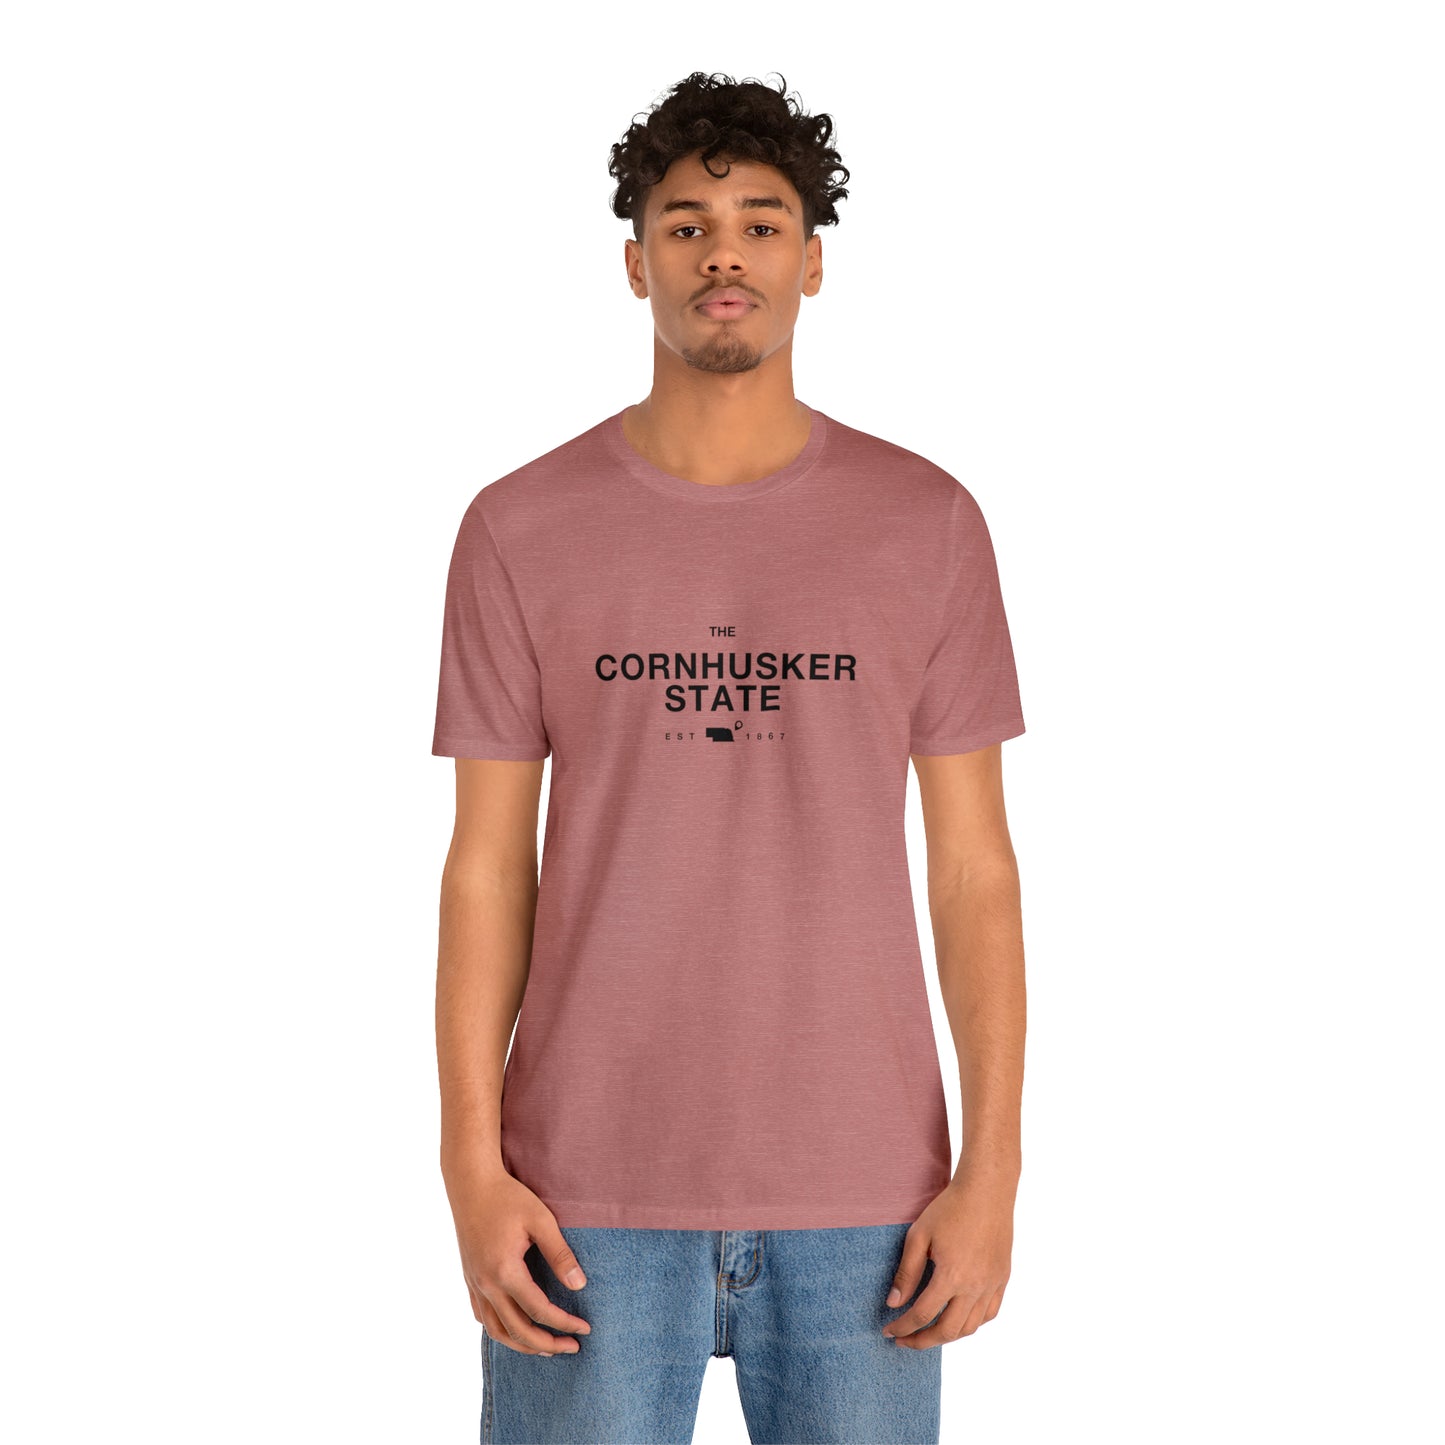 Nebraska Nickname Shirt